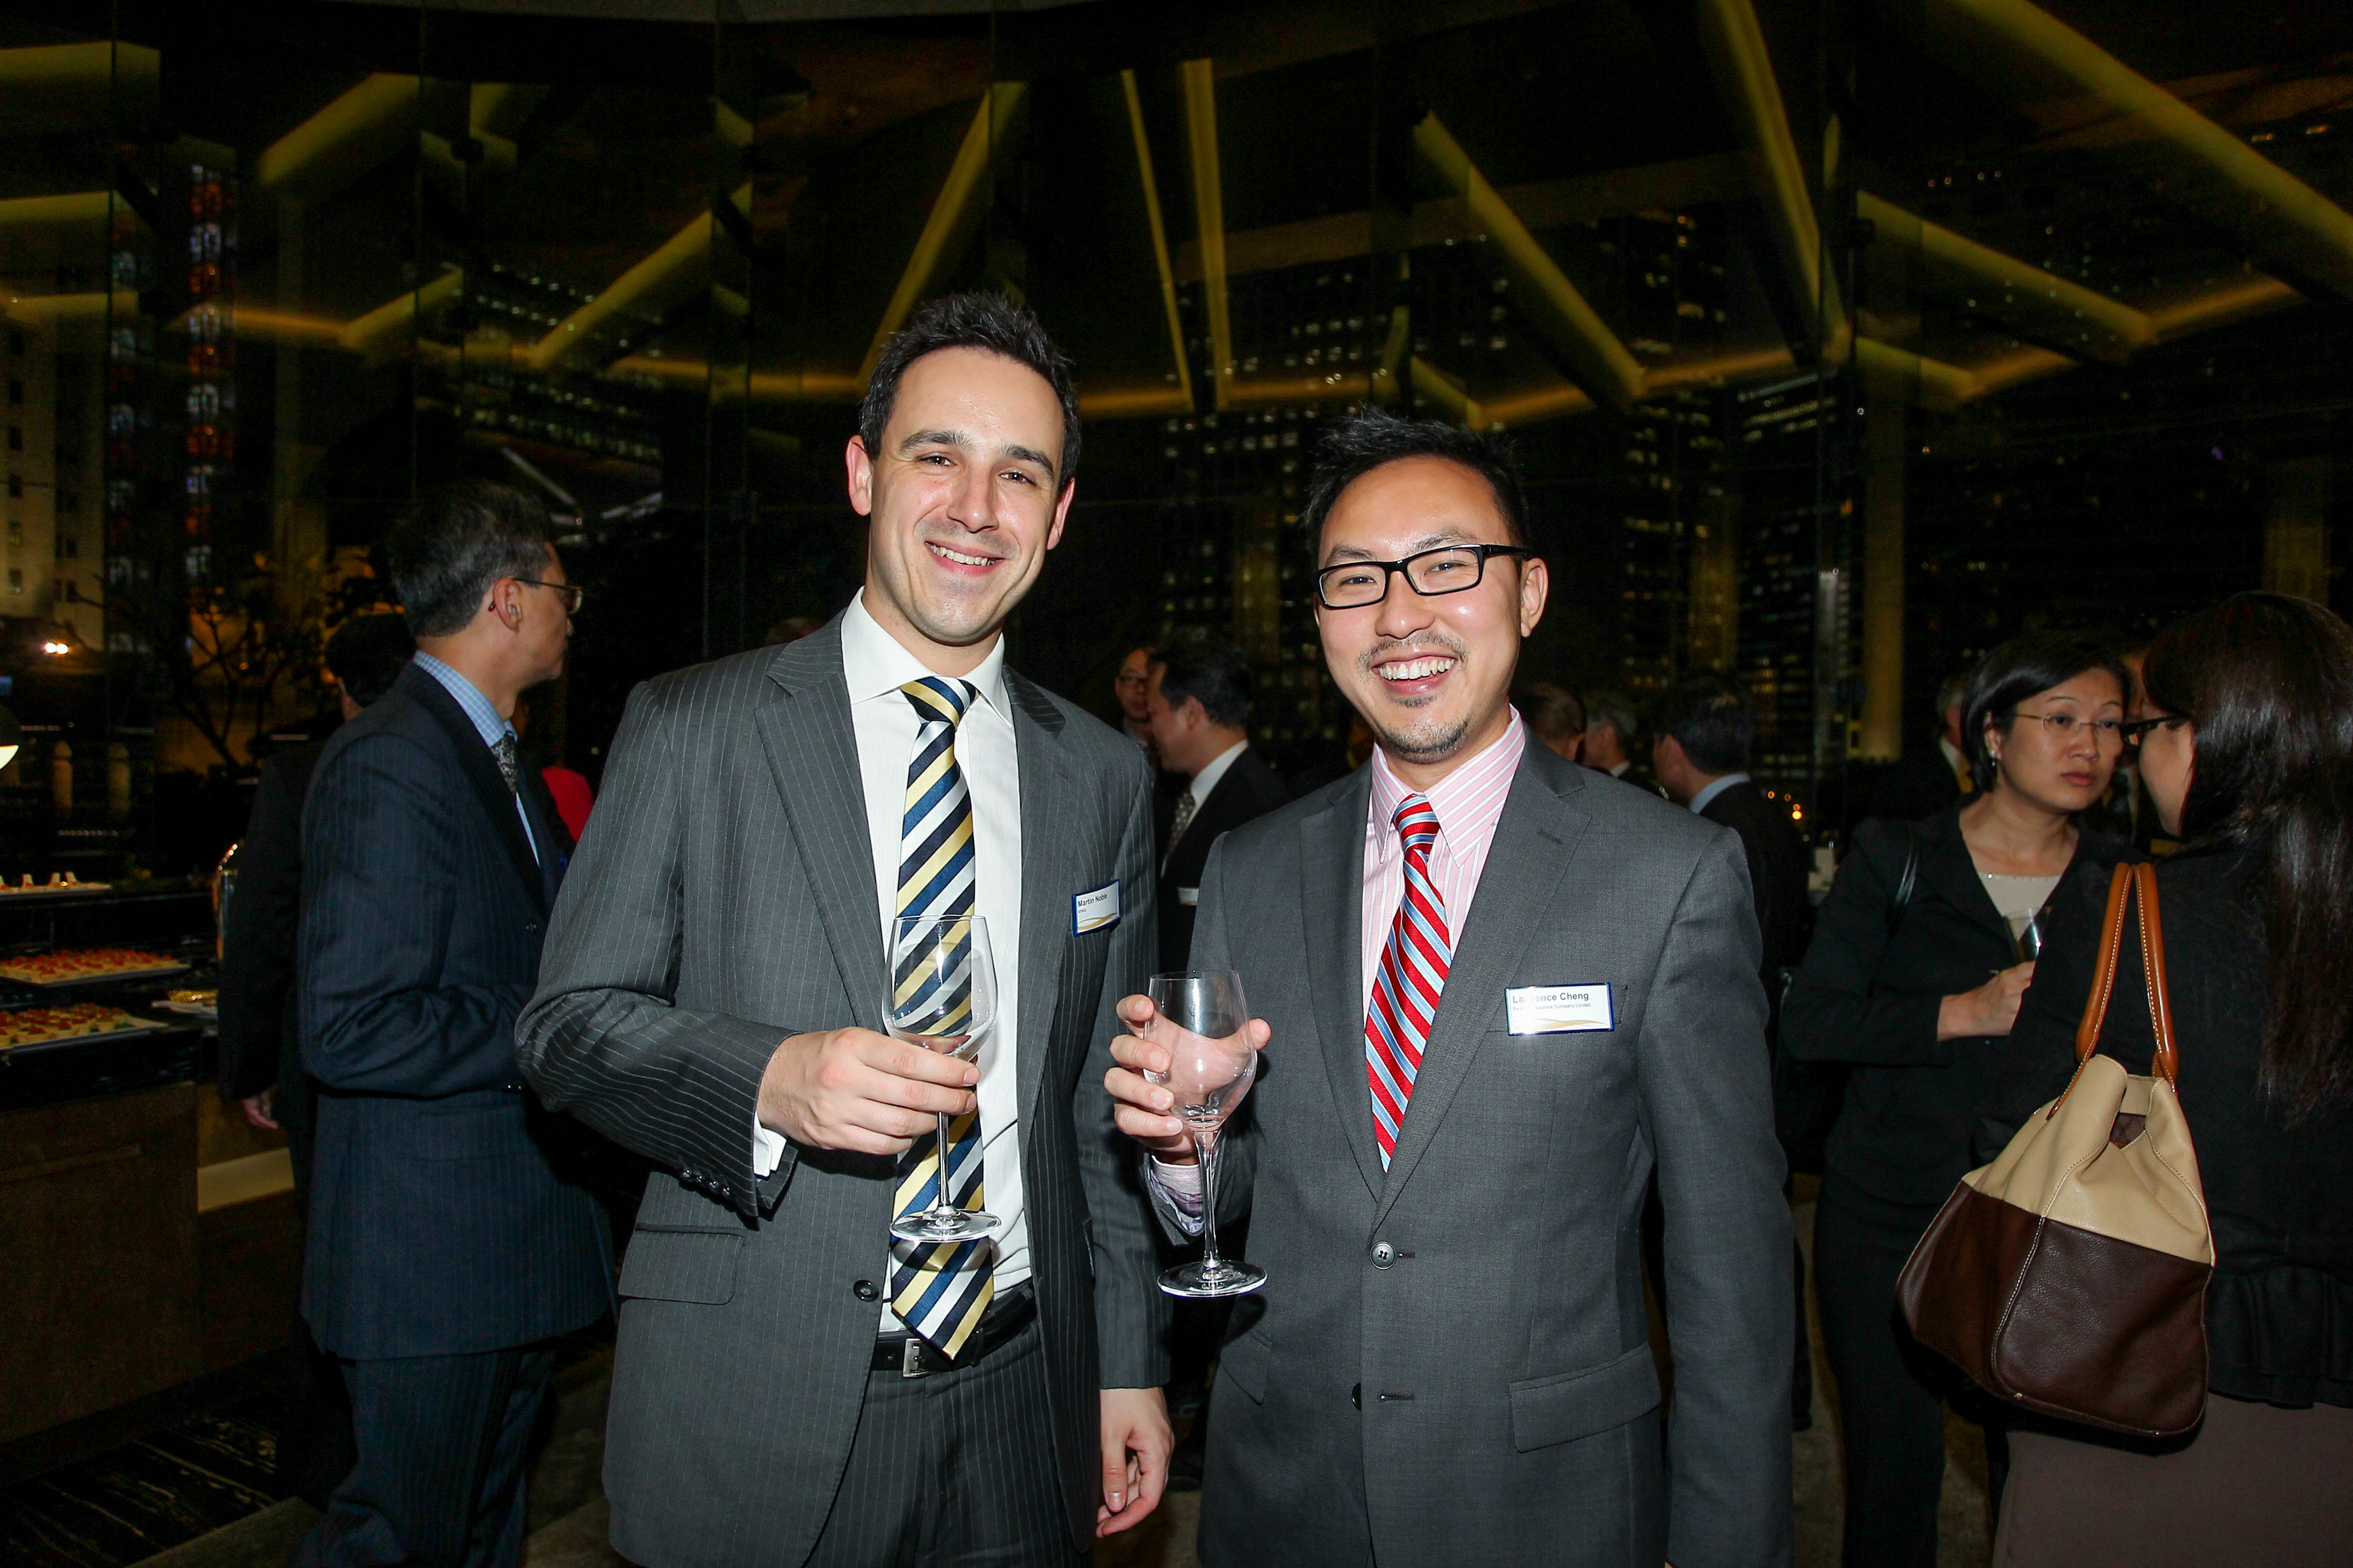 HKFI Annual Reception 2013 (1)